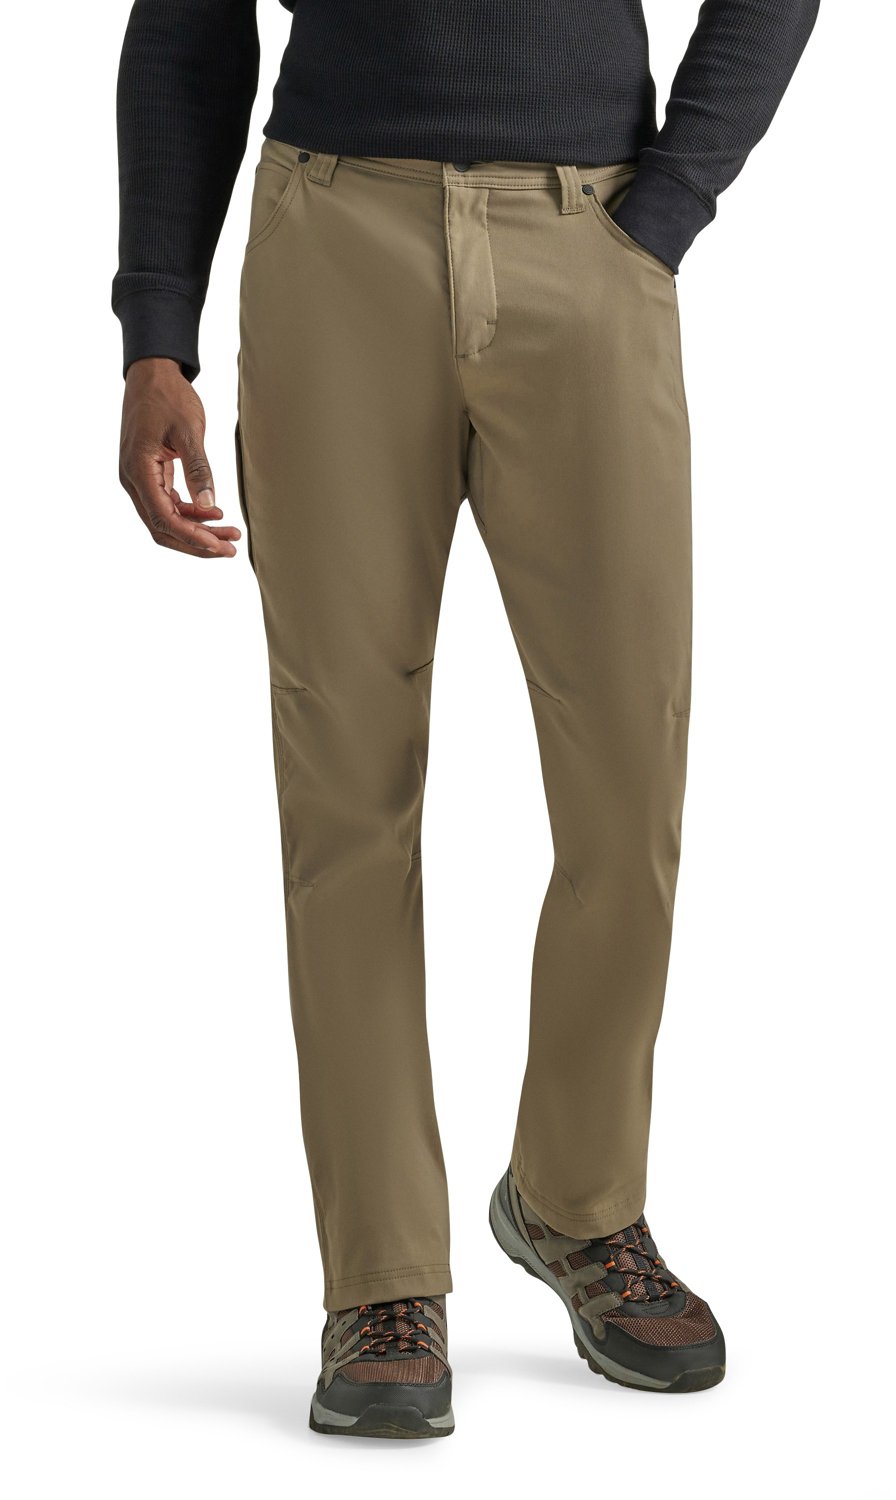 Wrangler Men's ATG Fleece Lined Utility Pants | Academy